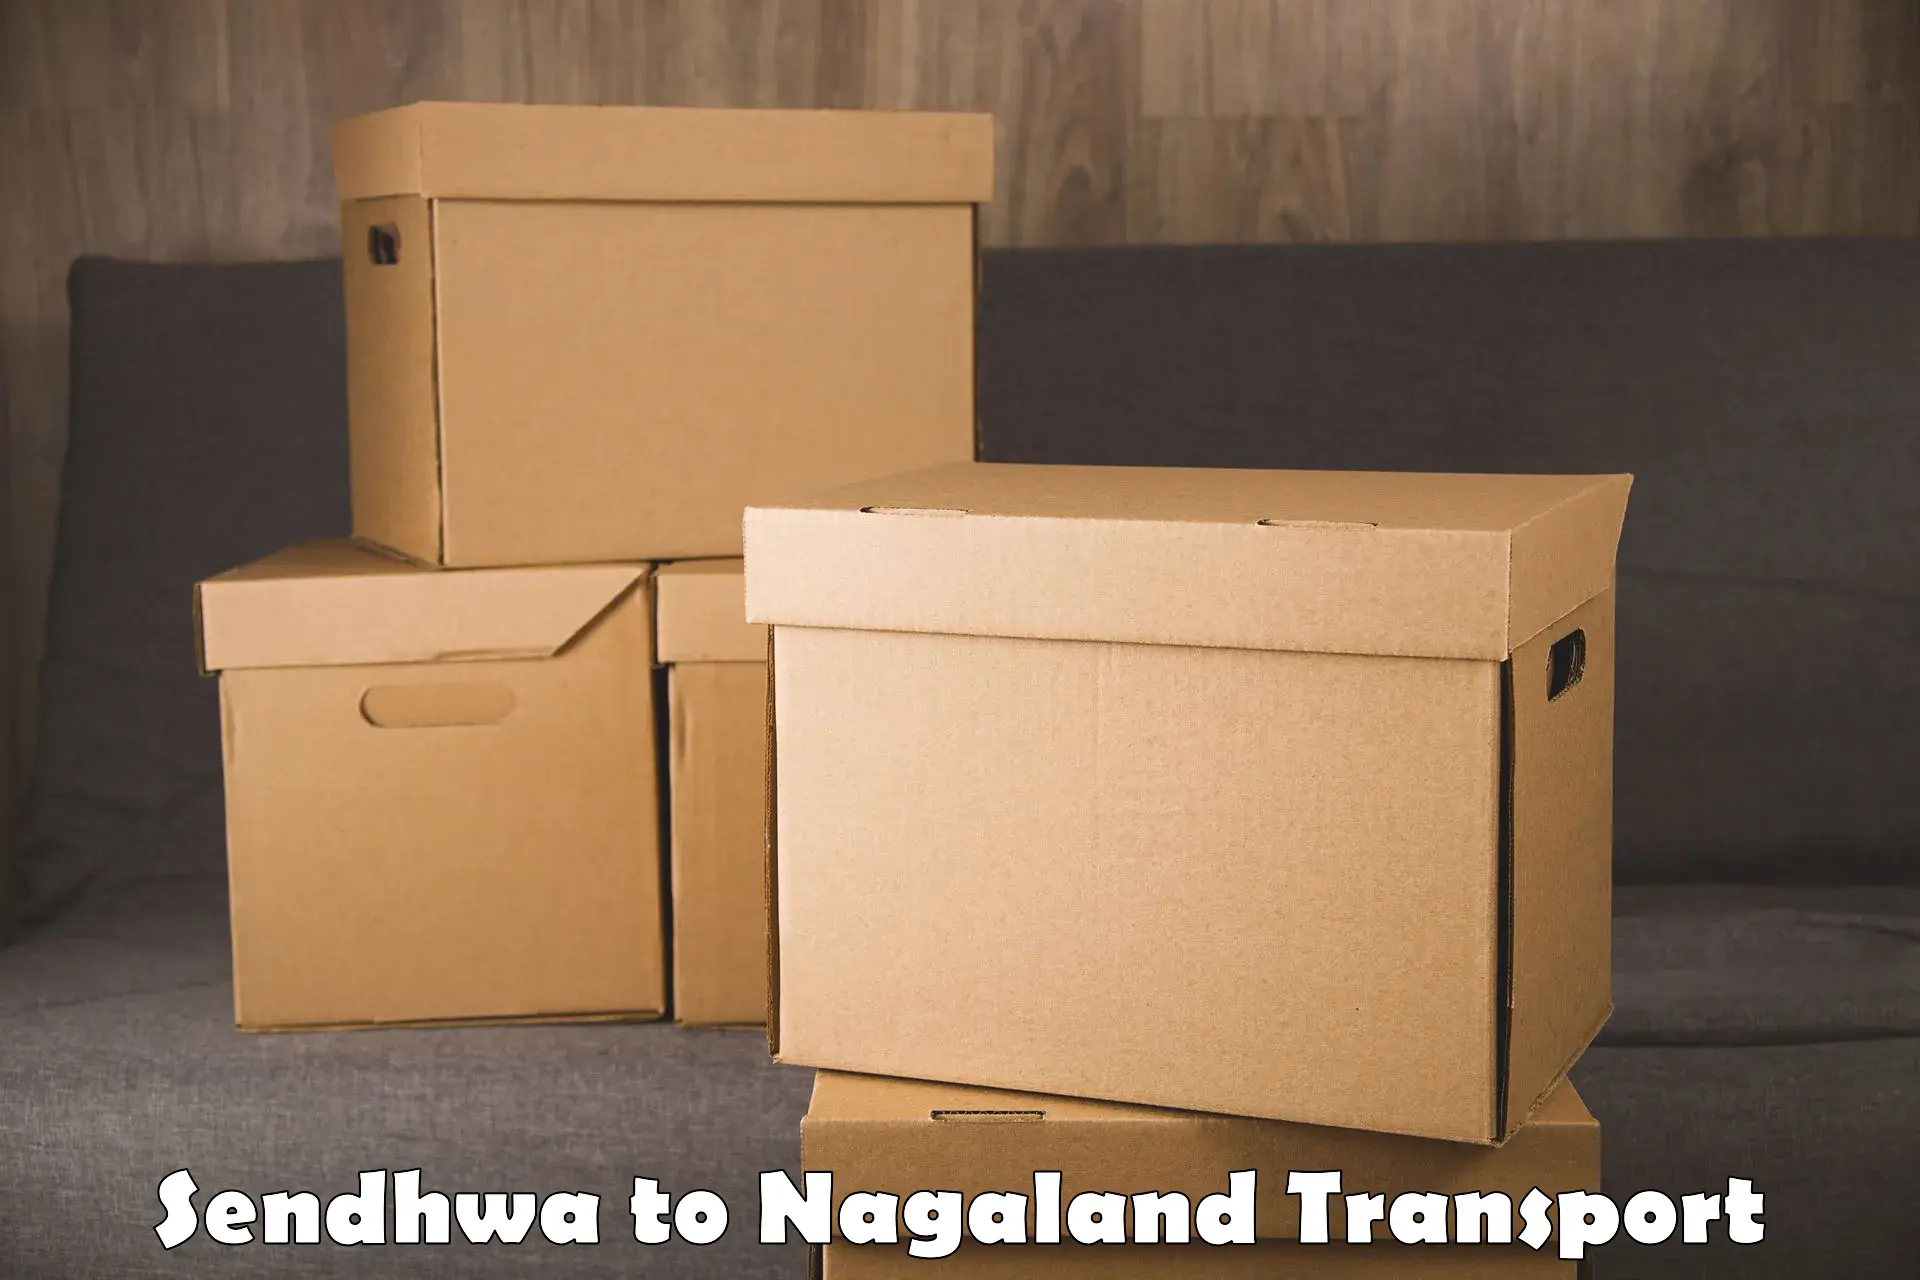 Commercial transport service Sendhwa to Nagaland